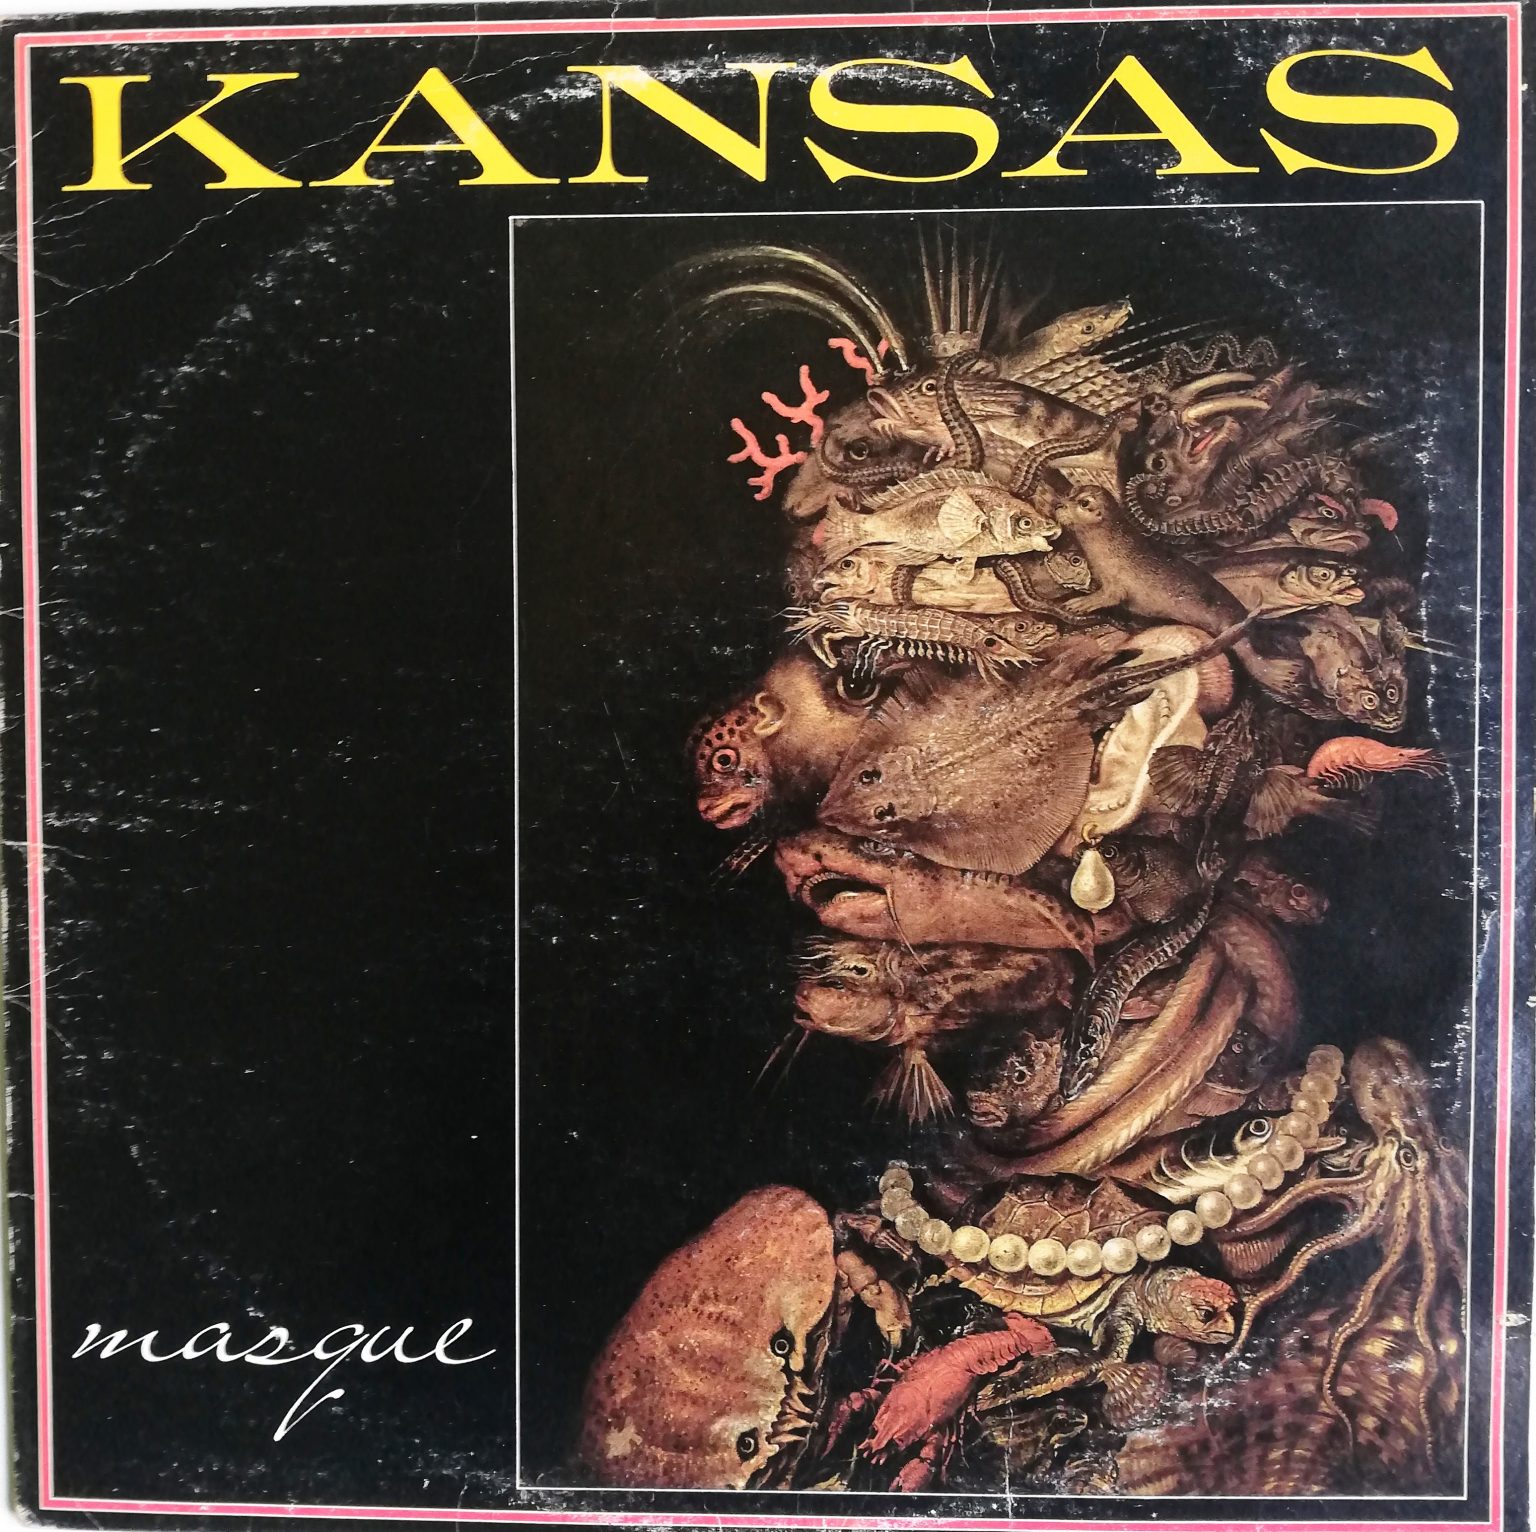 Kansas – Masque